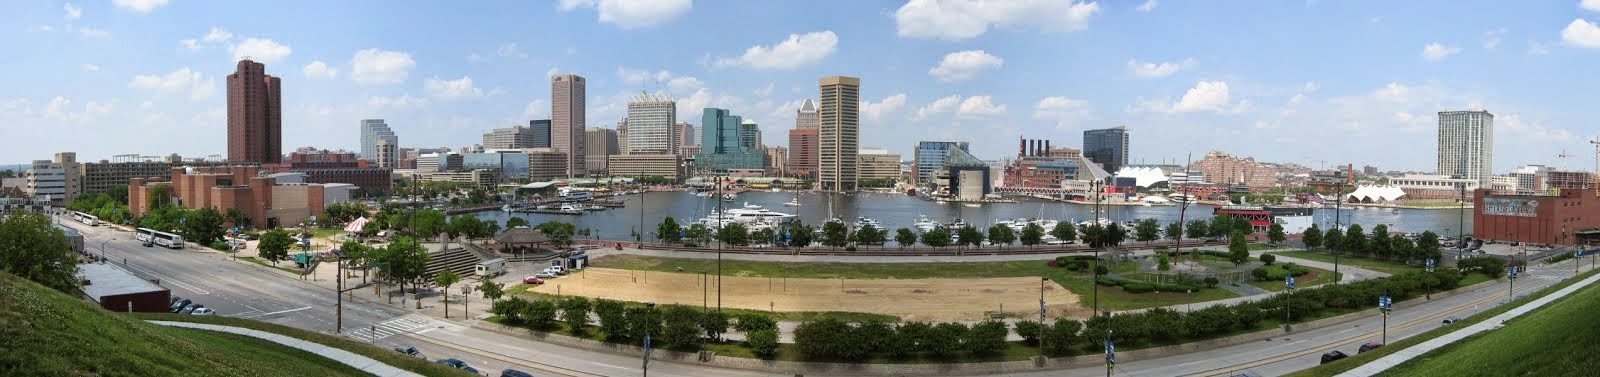 Baltimore Real Estate Investing